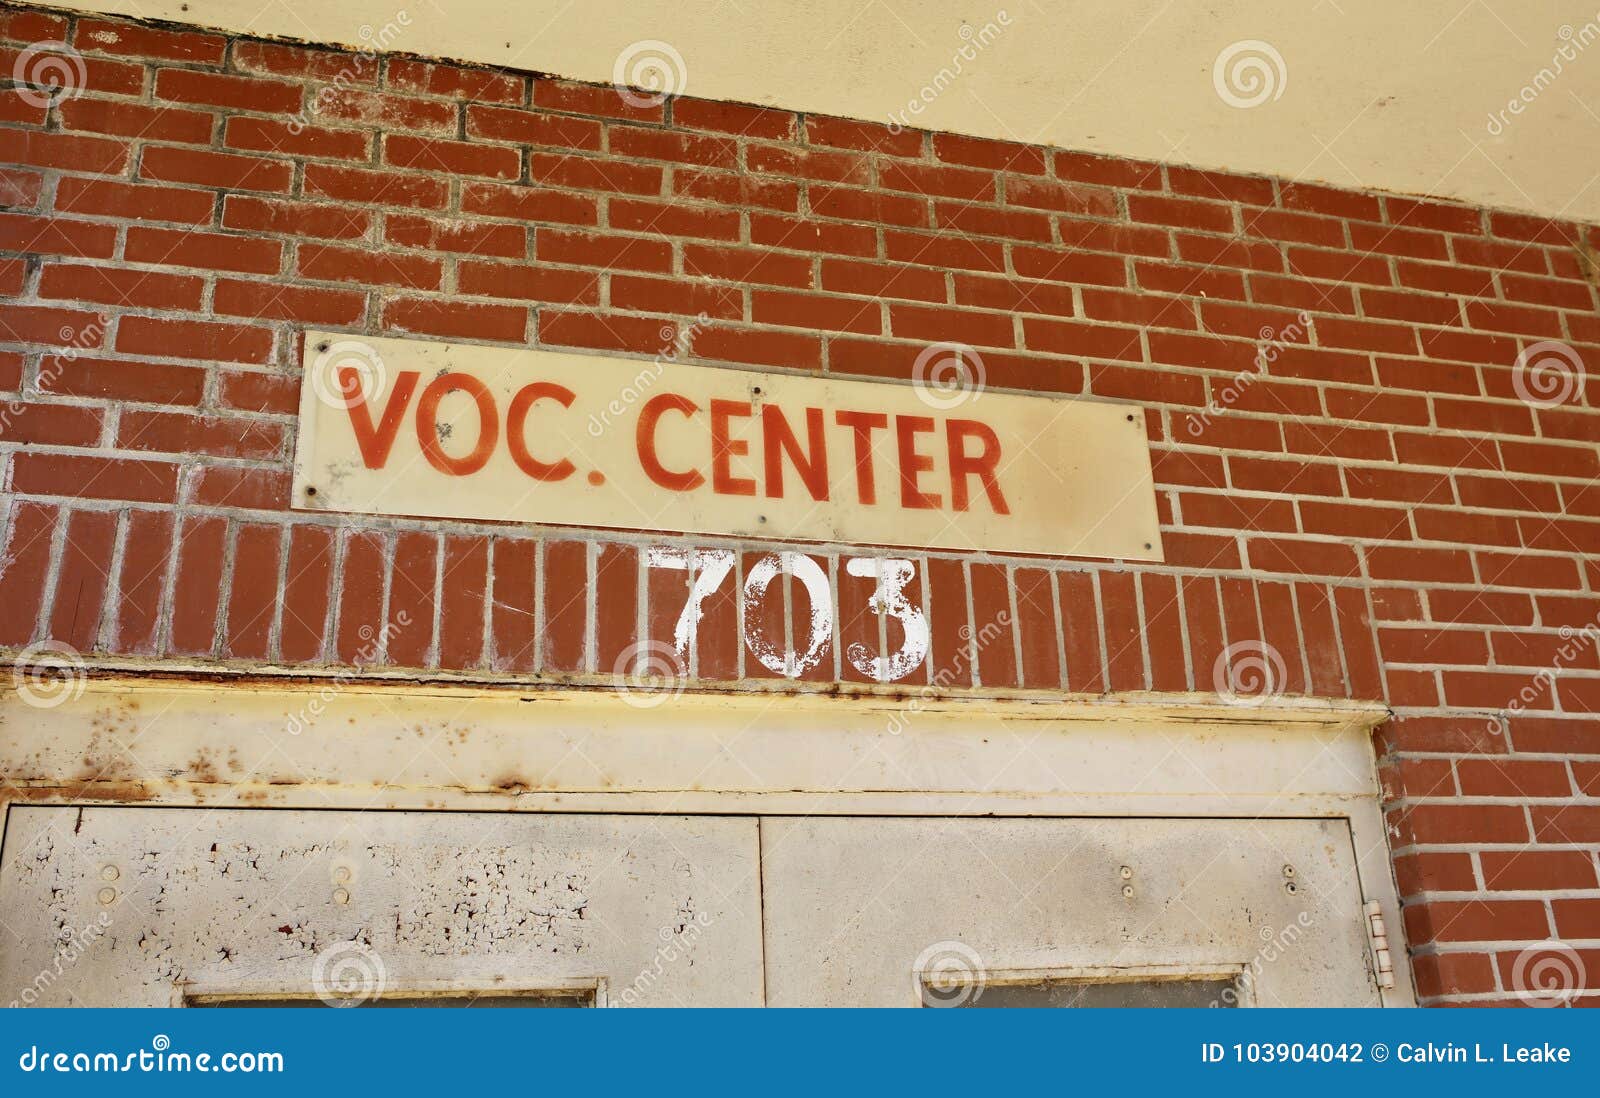 vocational school center